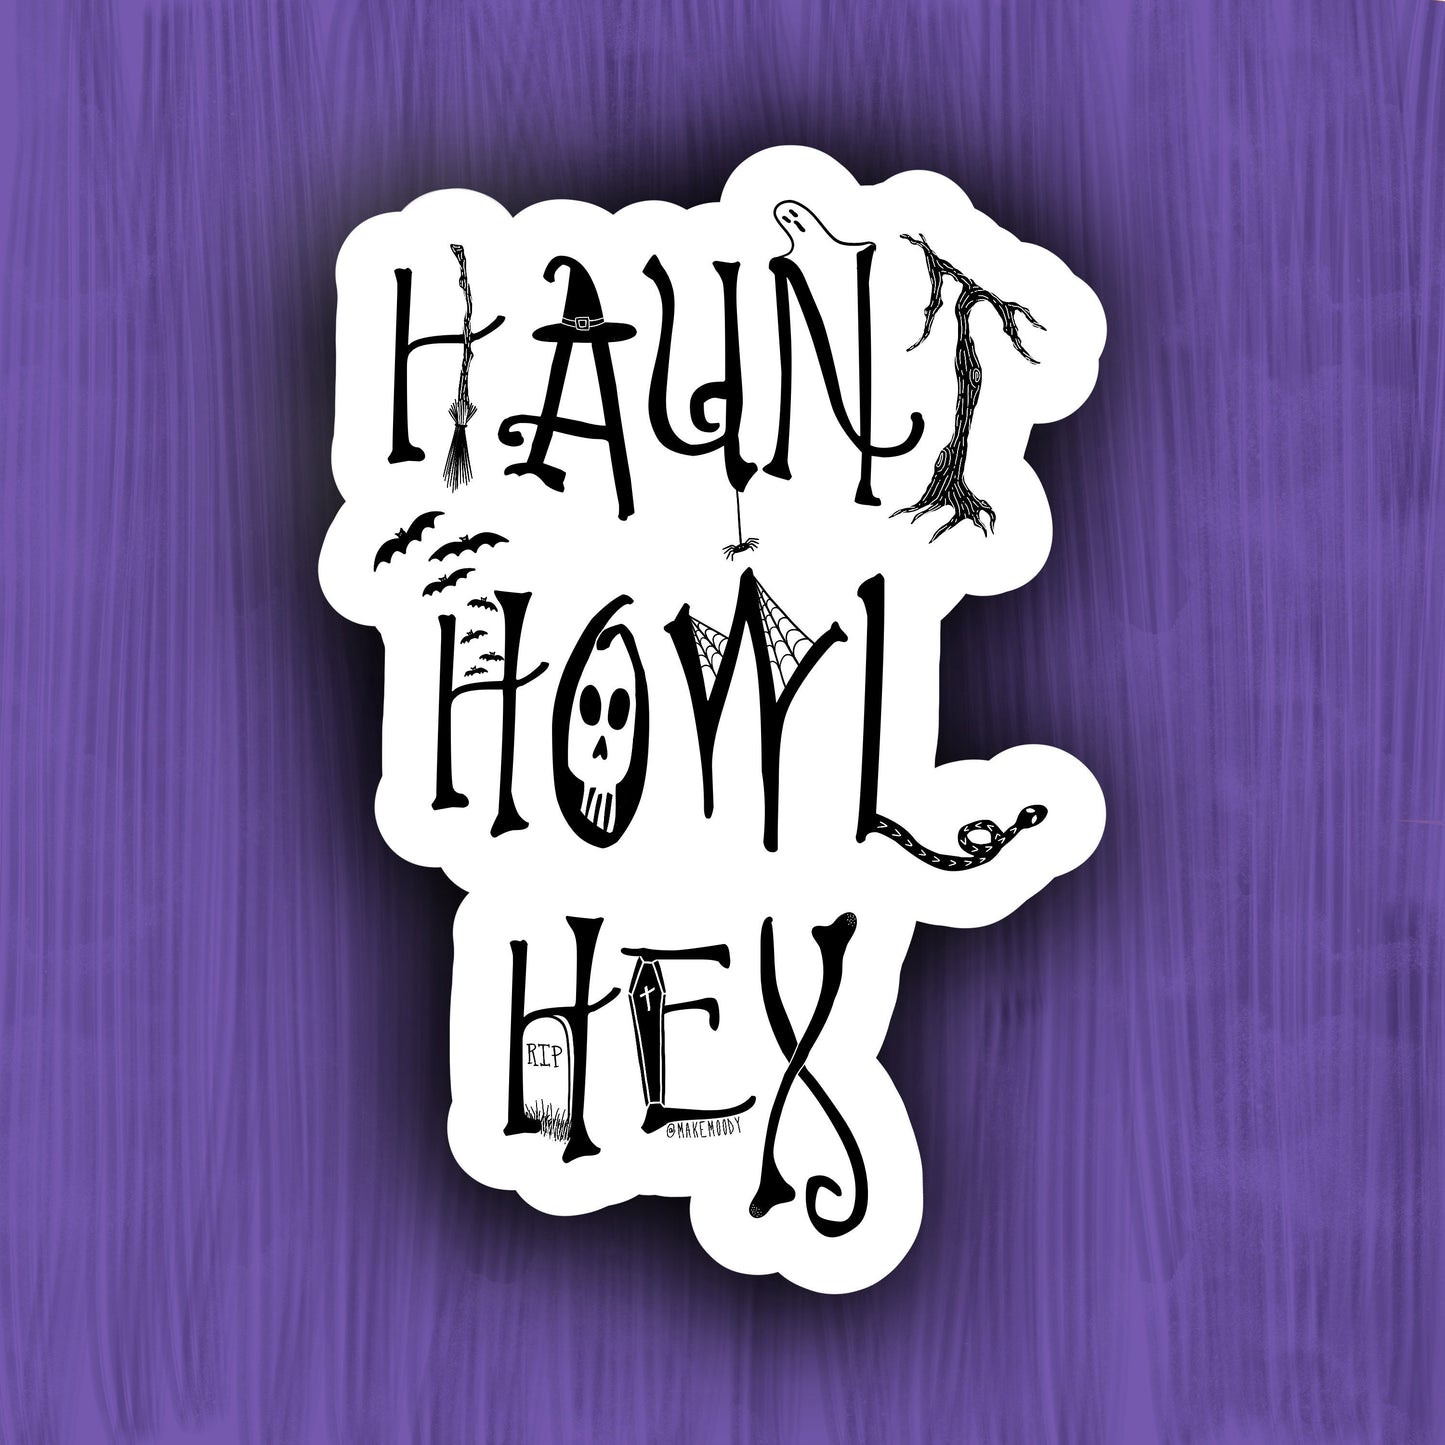 Spooky Live Laugh Love MAGNET - Fridge Magnet - Haunt Howl Hex Magnet, Spooky Magnet, Halloween Magnet, Haunted Magnet, Spoopy Magnet